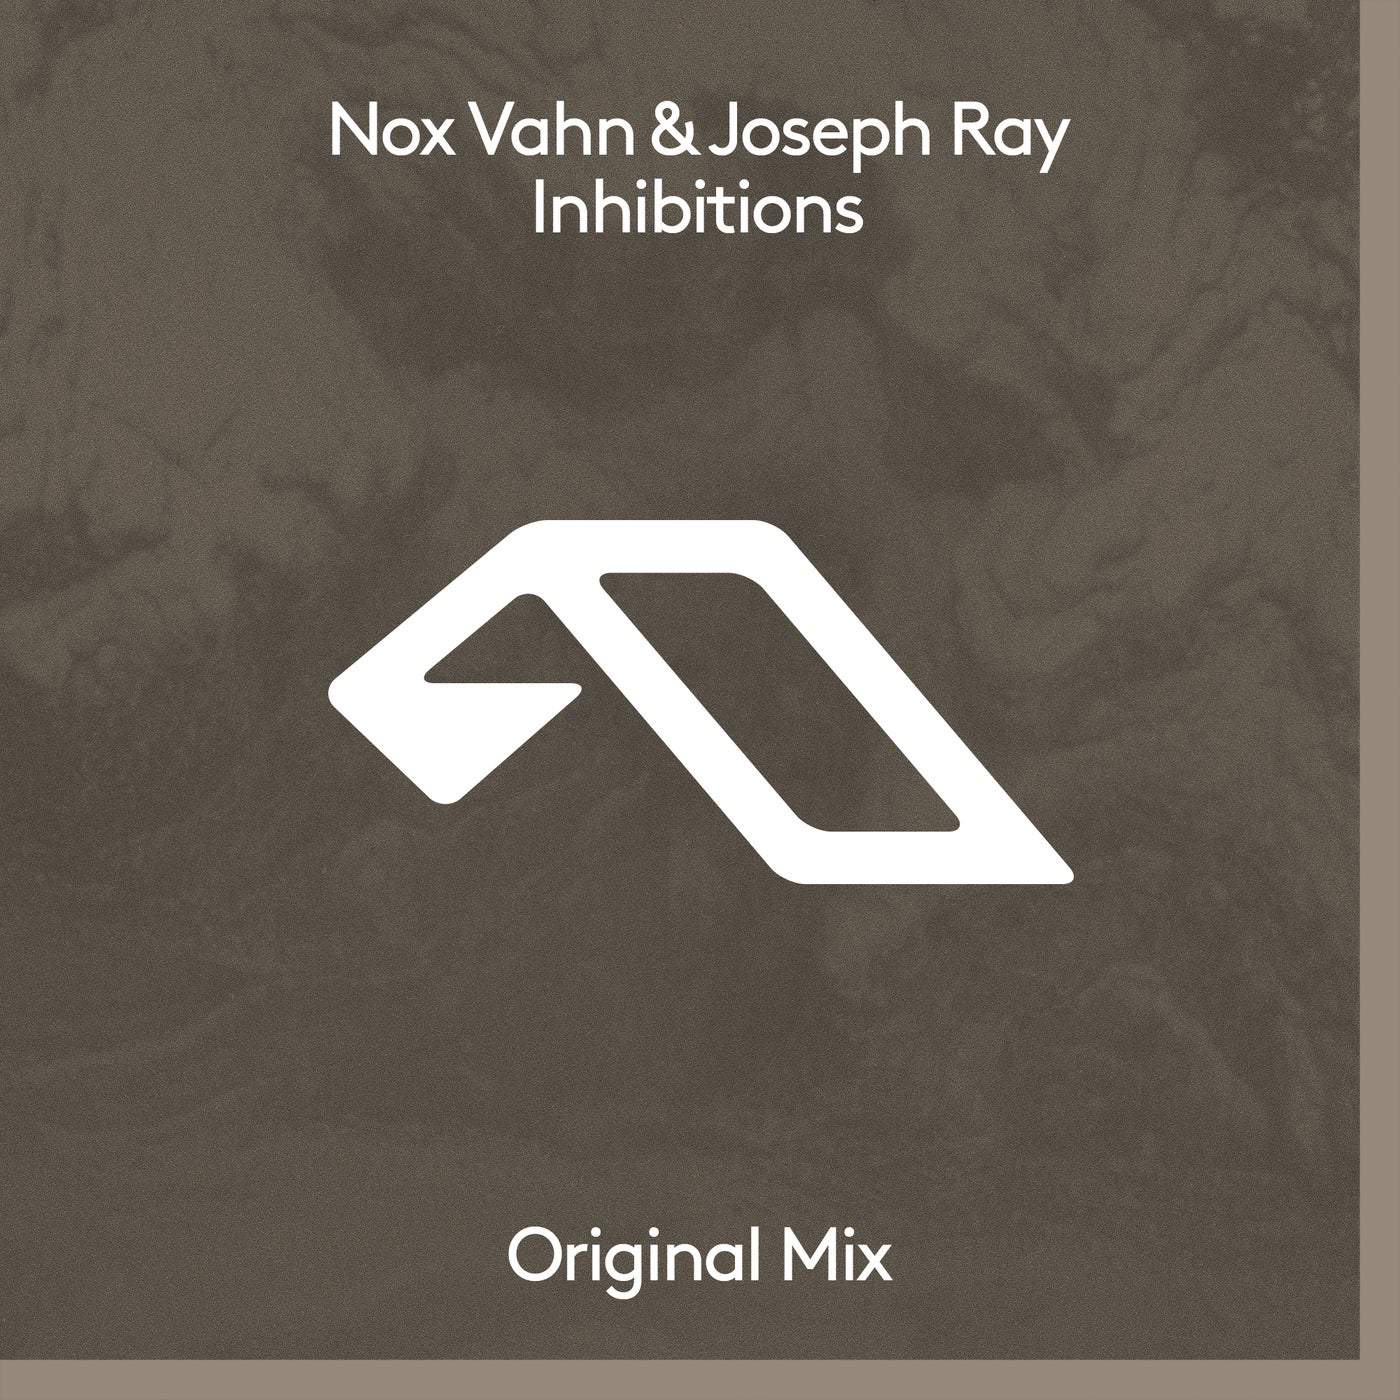 Download Joseph Ray, Nox Vahn - Inhibitions on Electrobuzz